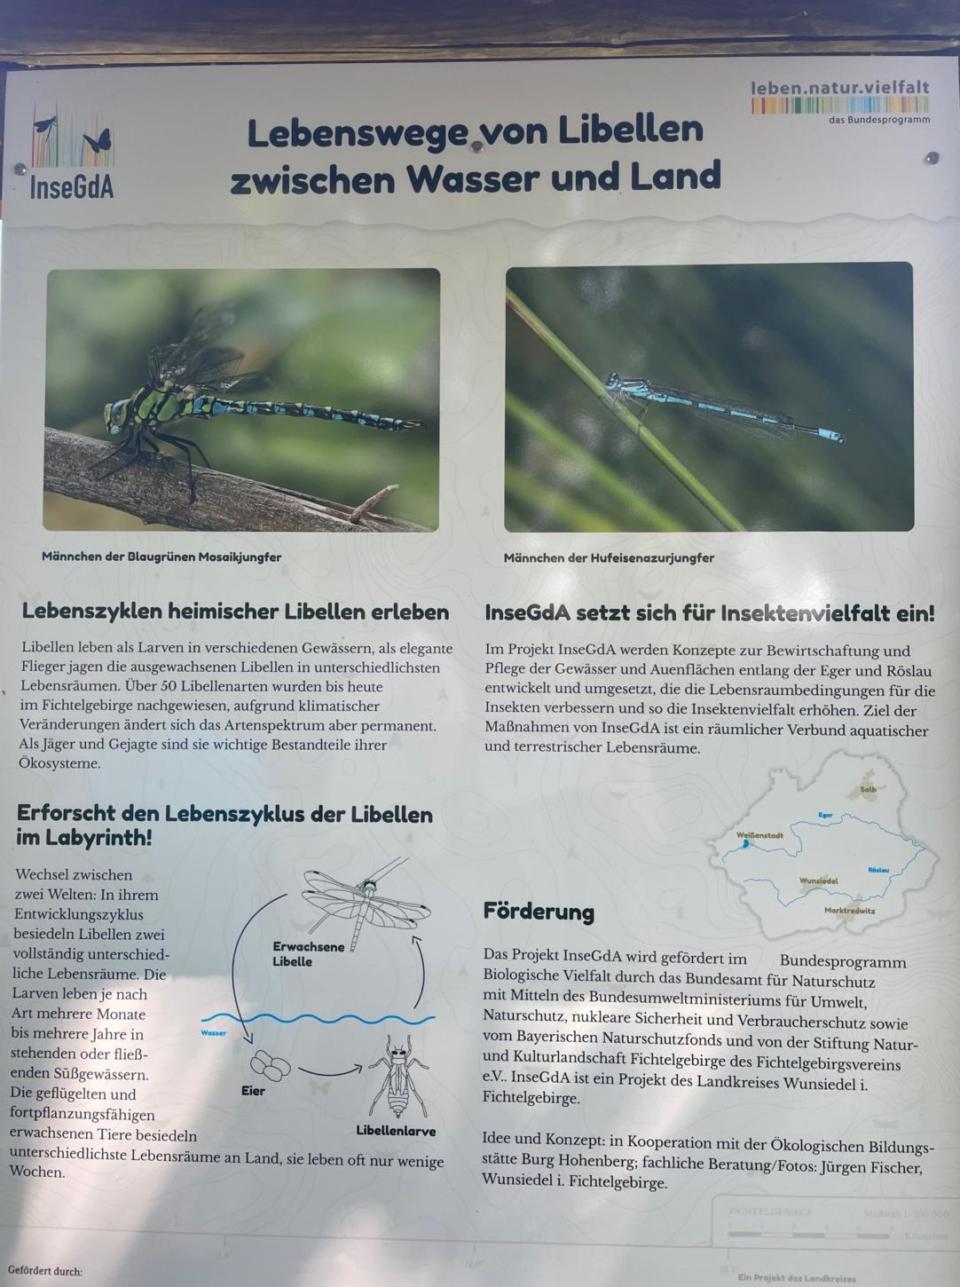 Informationstafel zum Lebensweg der Libelle am Eingang des Labyrinths